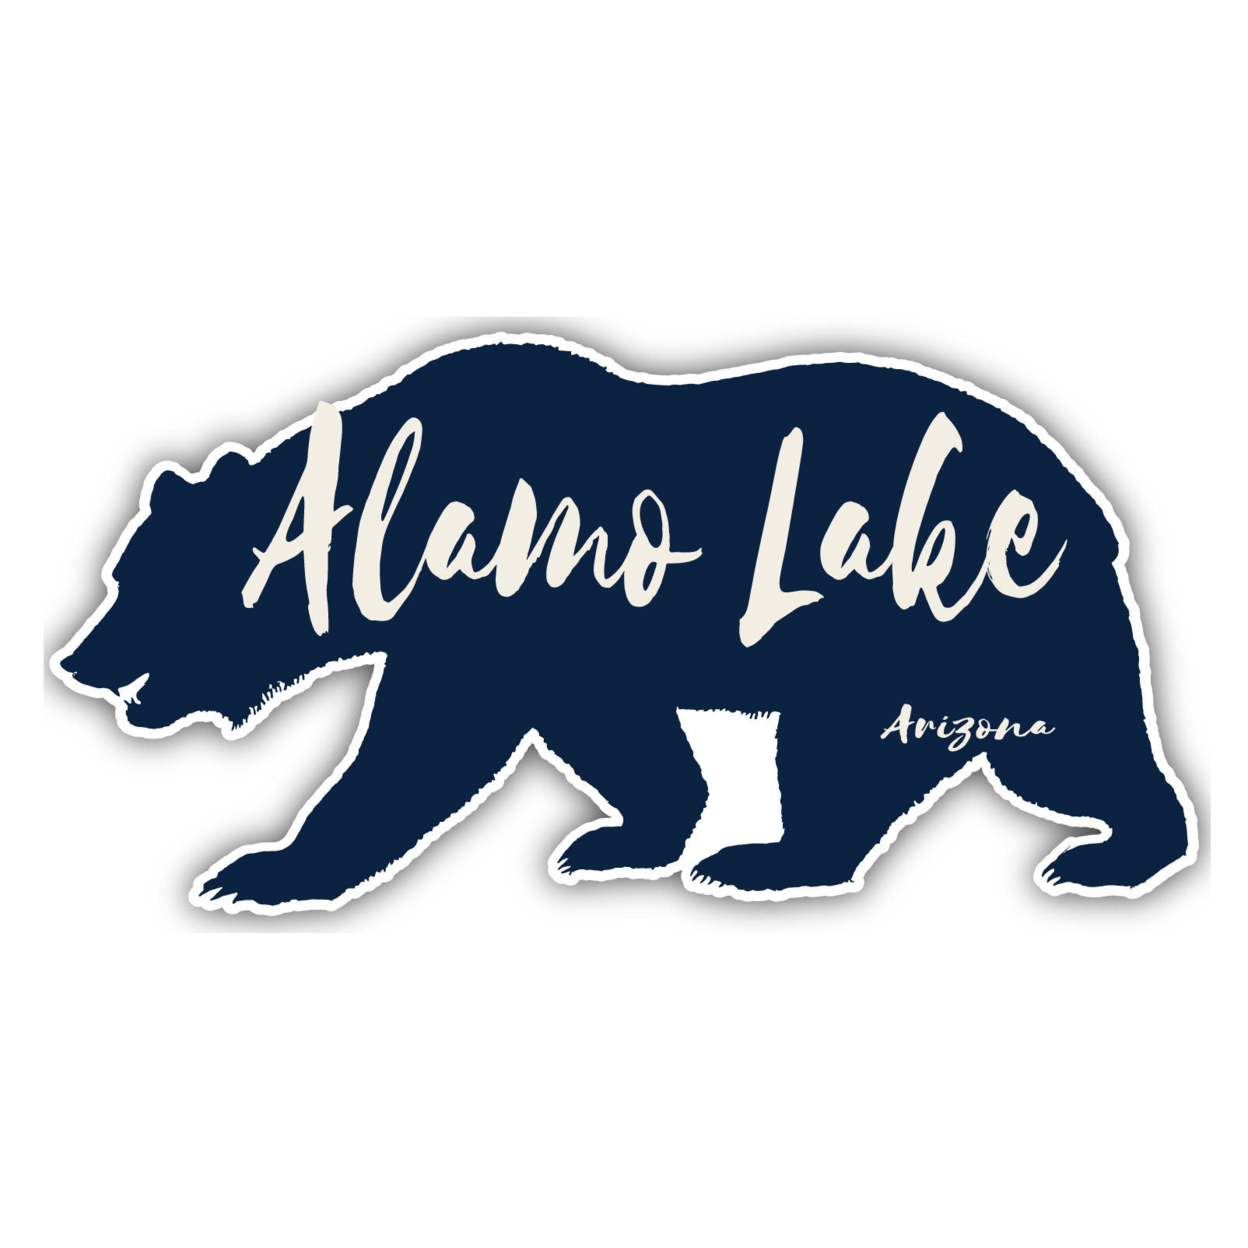 Alamo Lake Arizona Souvenir Decorative Stickers (Choose Theme And Size) - 4-Pack, 8-Inch, Tent